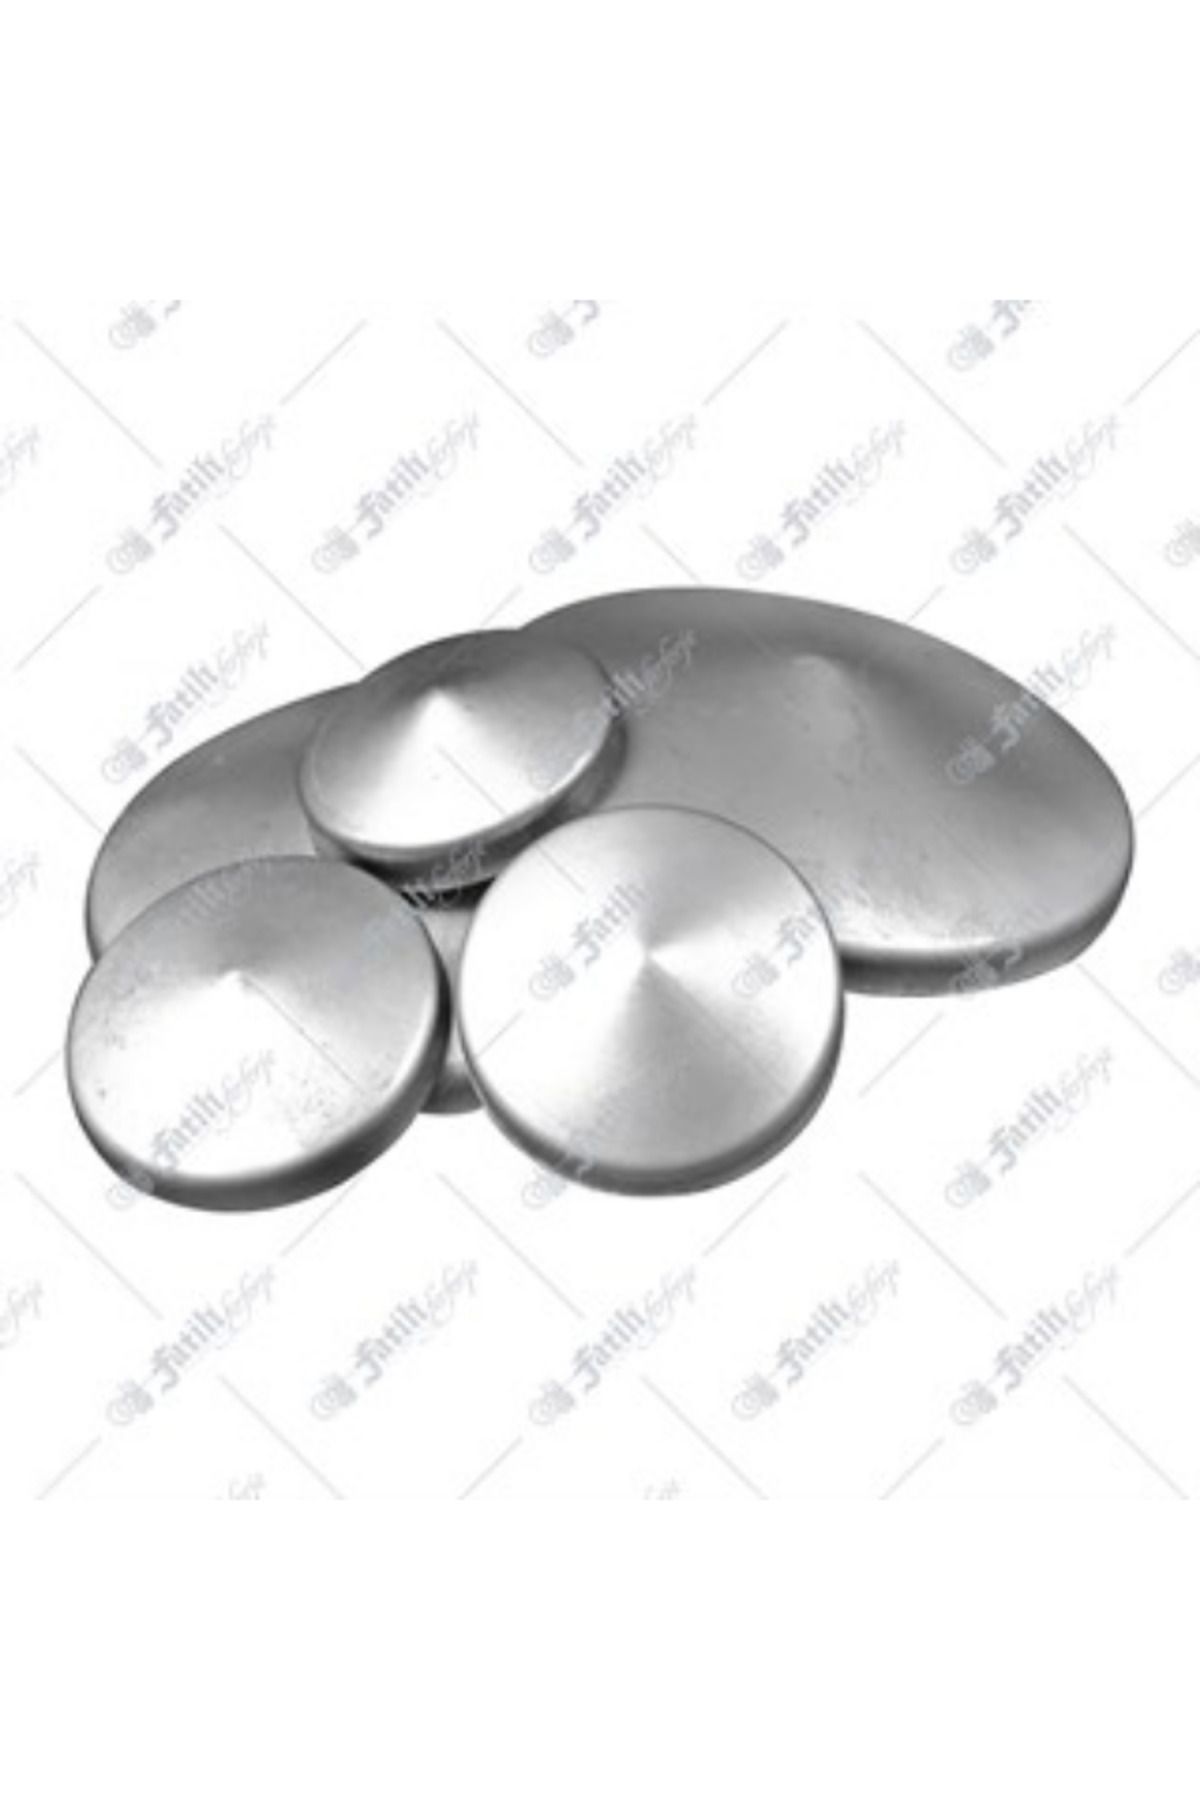 Fatih Dekoratif Metal Boru Kapağı 10 Adet - ASD-663